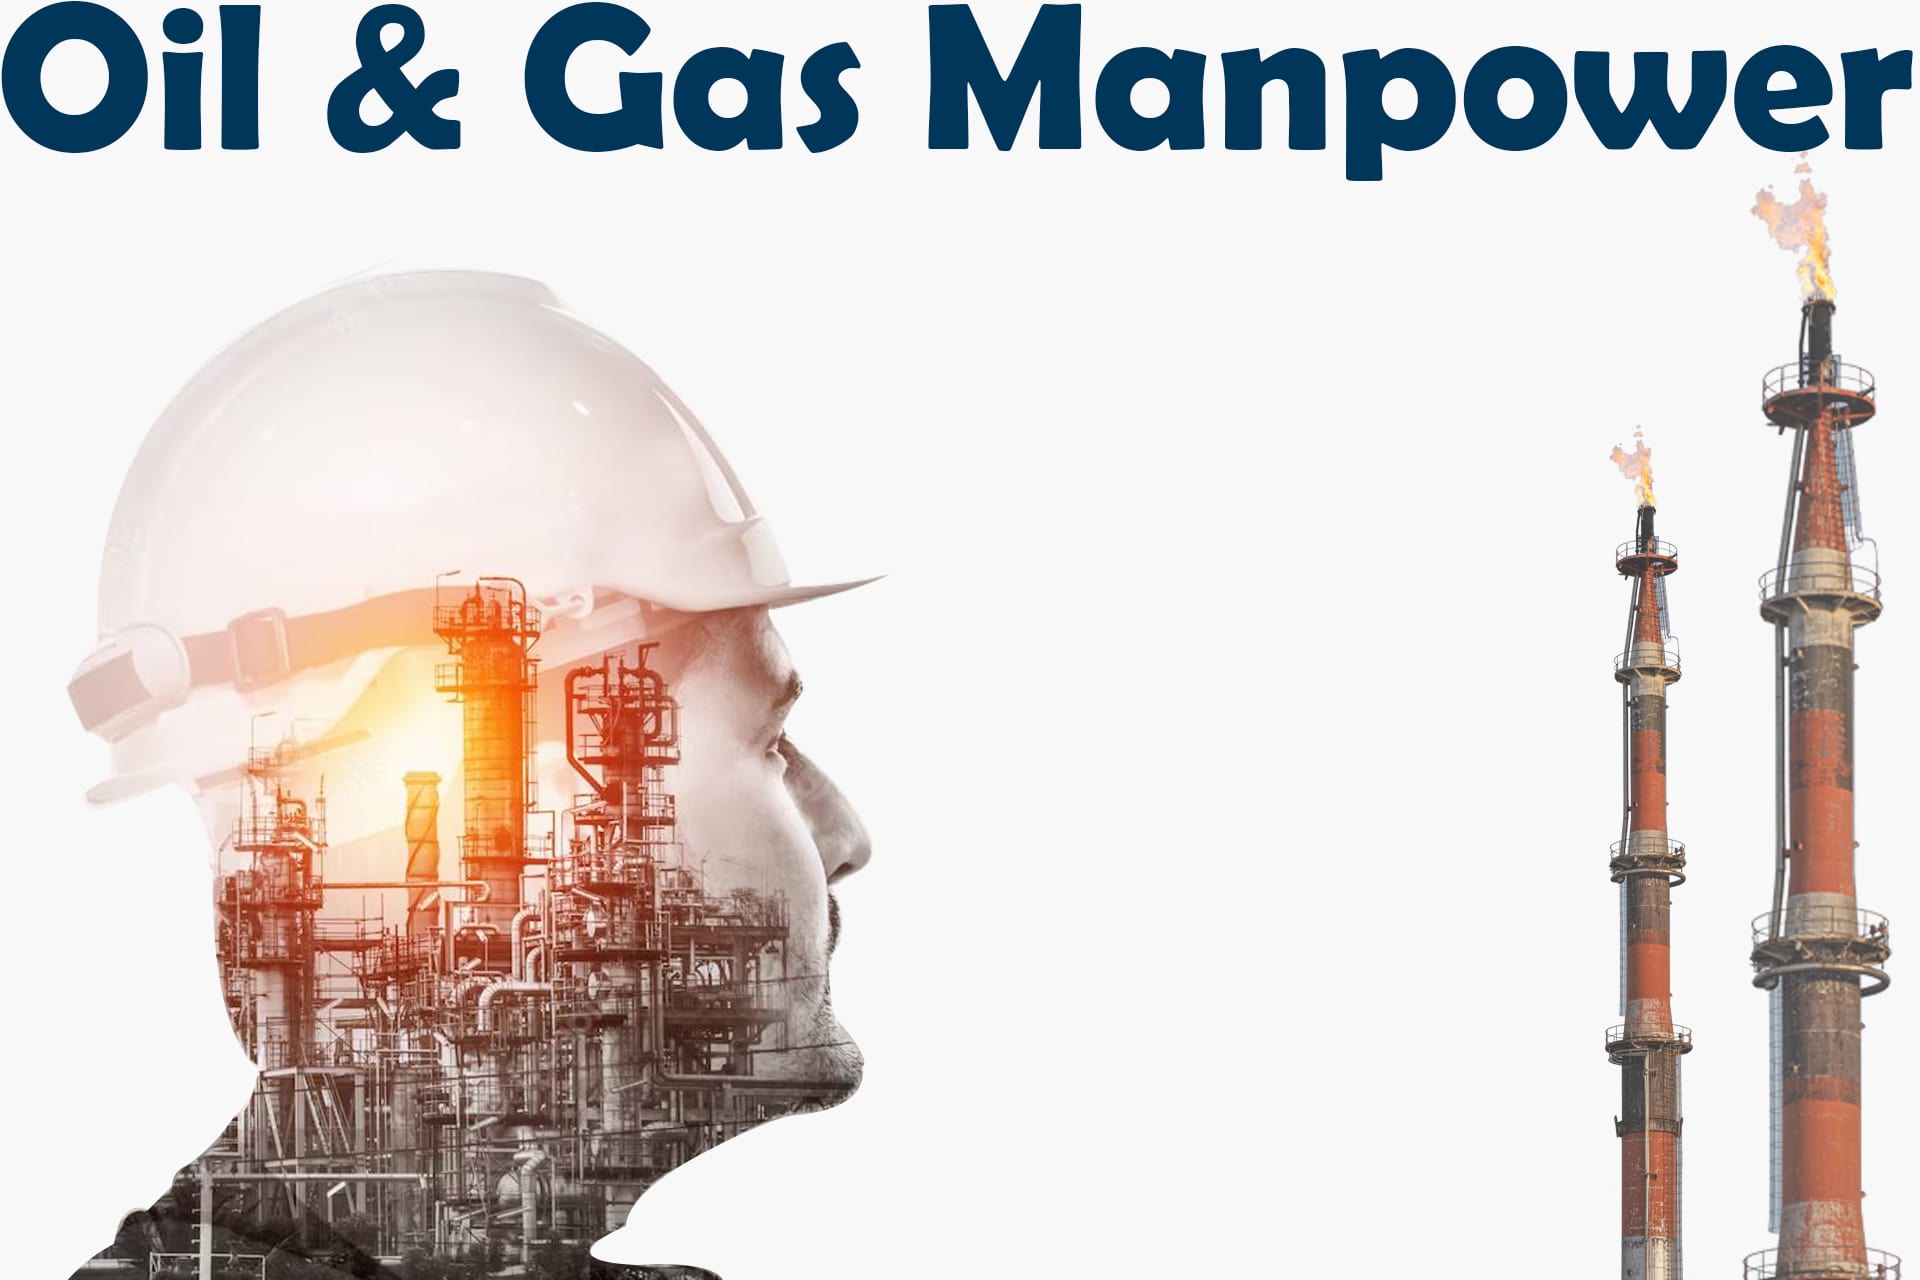 Oil & Gas Manpower Services